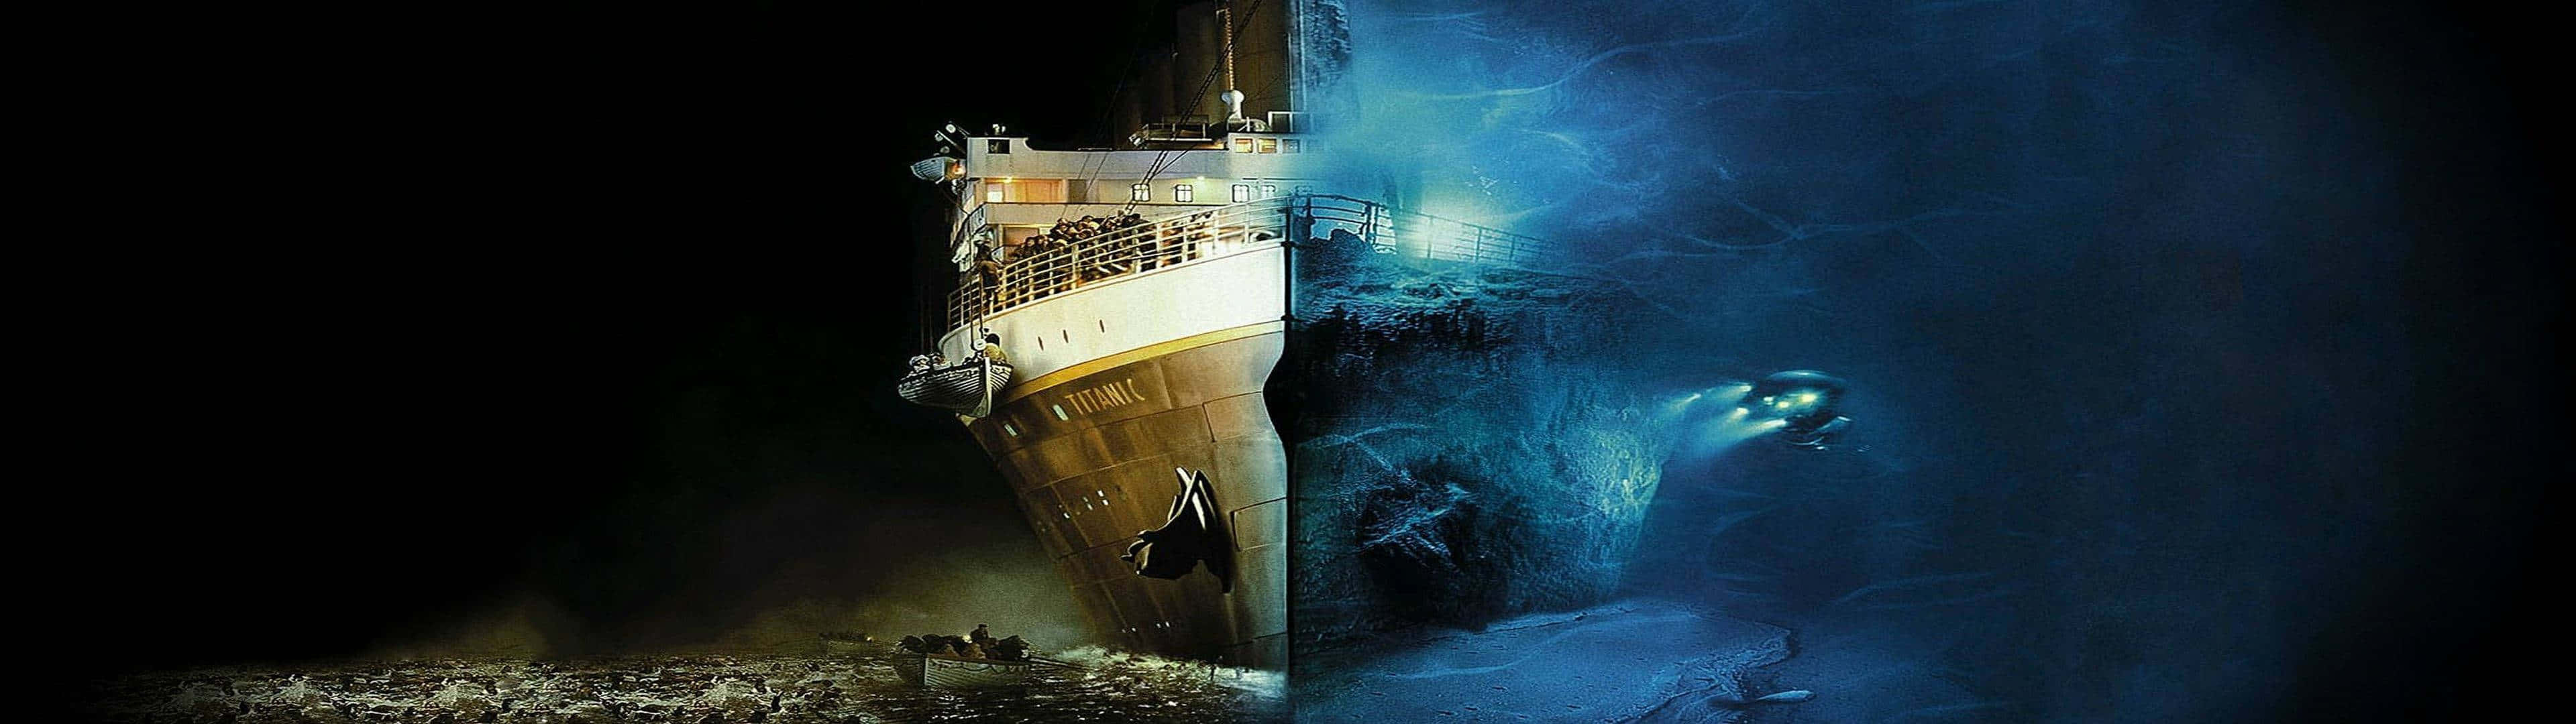 The Titanic Ultra Hd Dual Monitor - Wallpaper Wallpaper